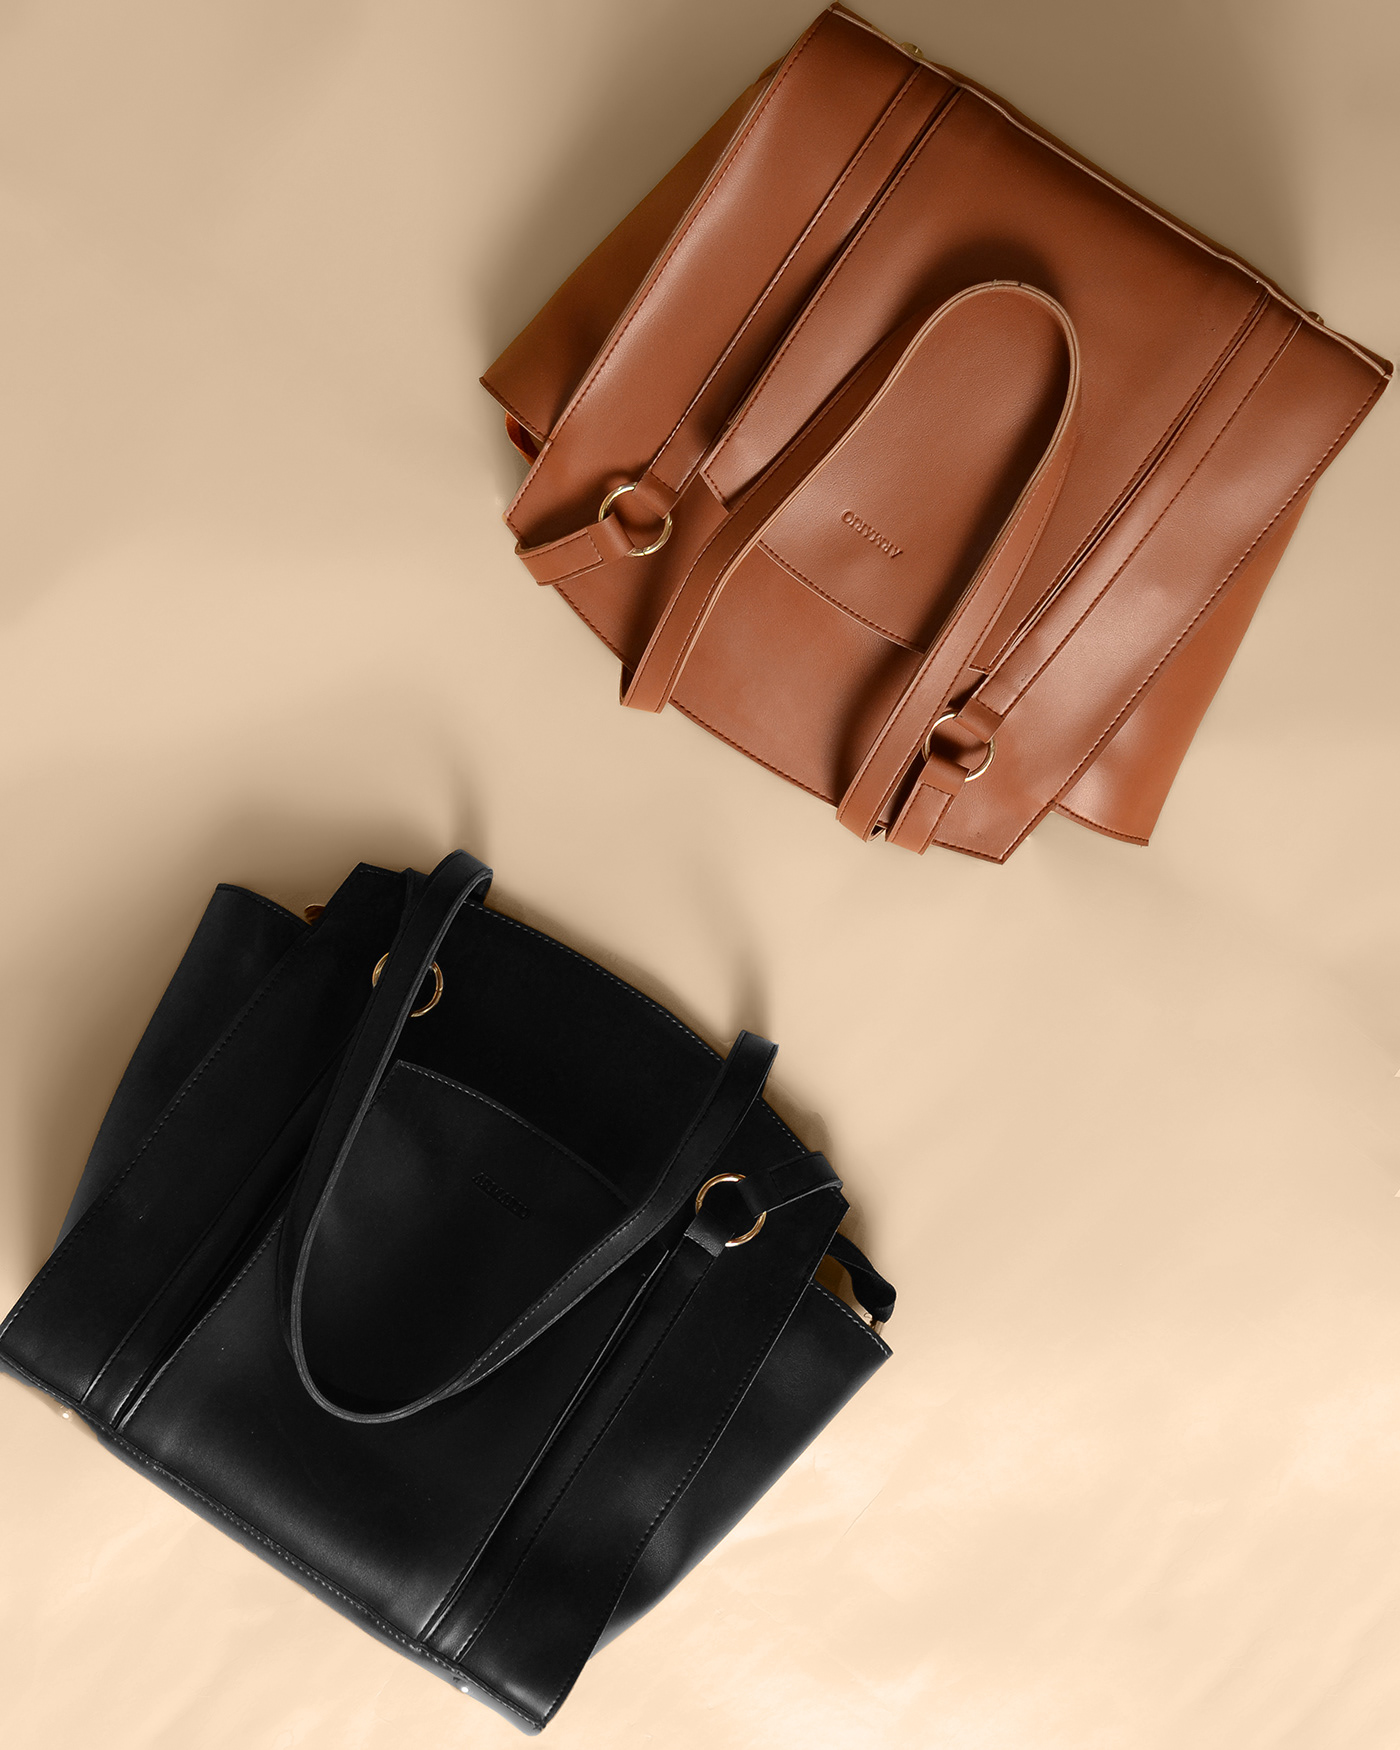 fashion accessory Photography  handbag leather accessories bags Fashion  women